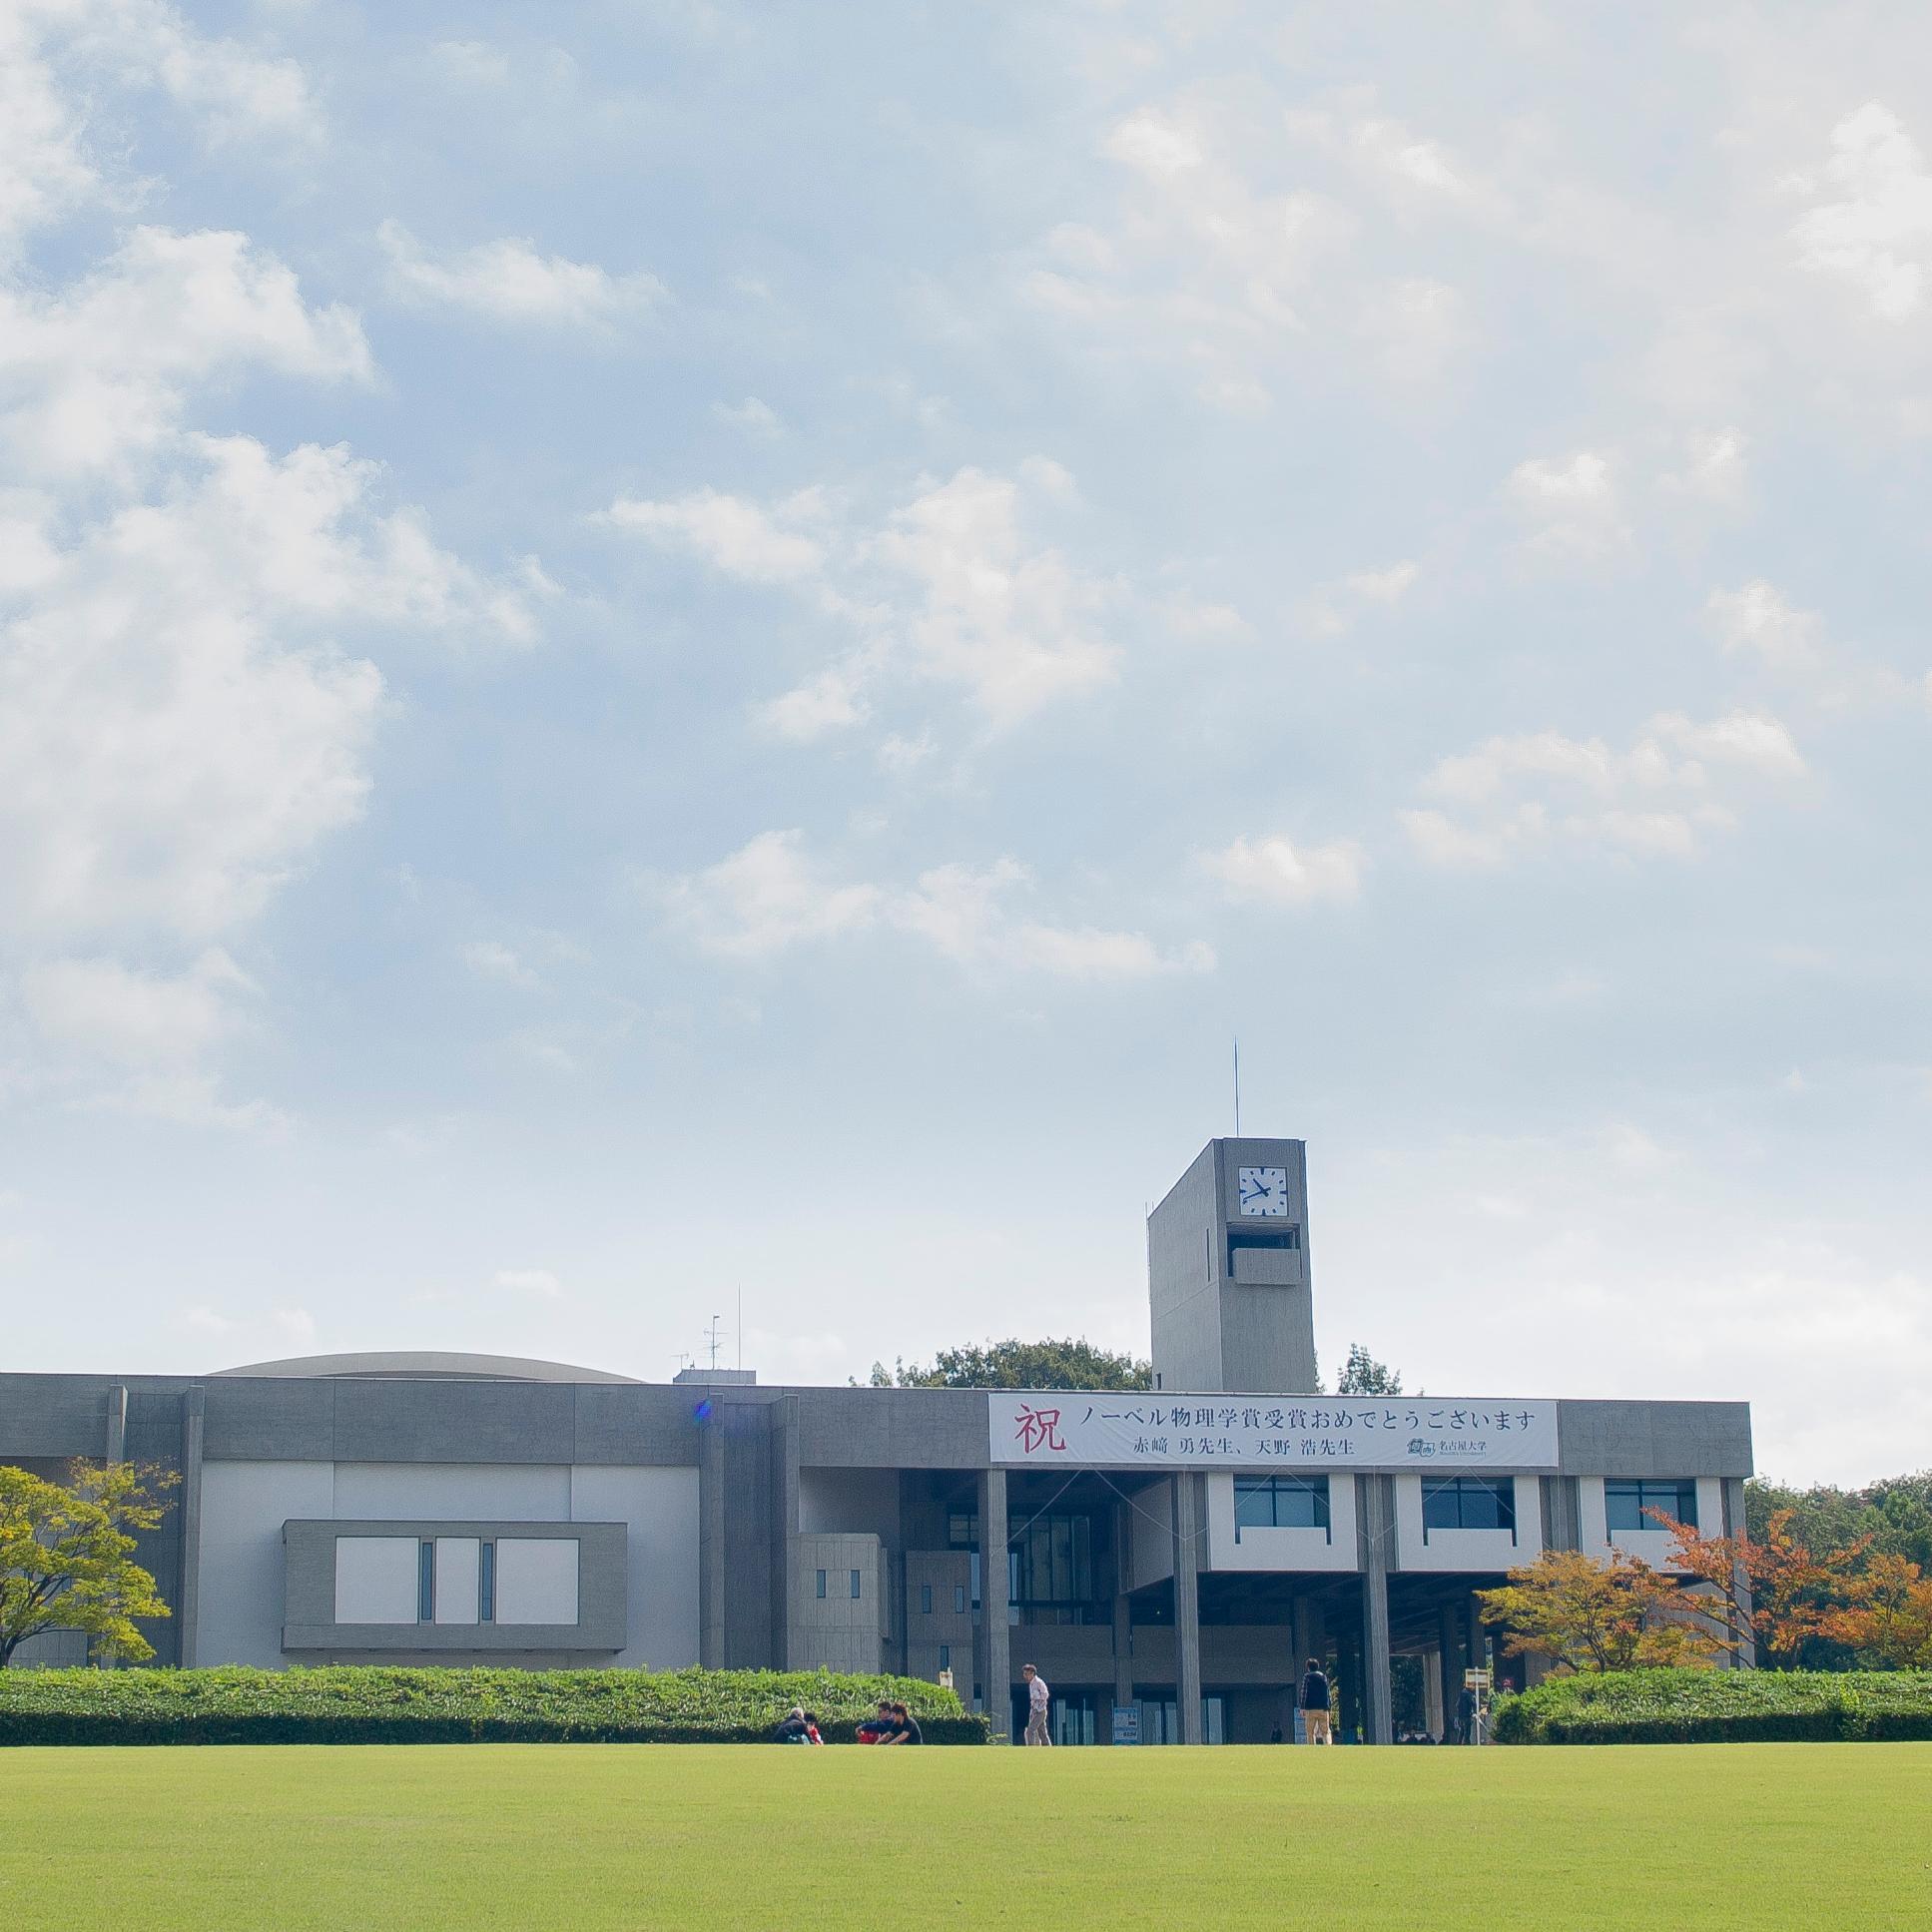 Twitter feed for Nagoya University International Programs Admissions Office (G30 Program).